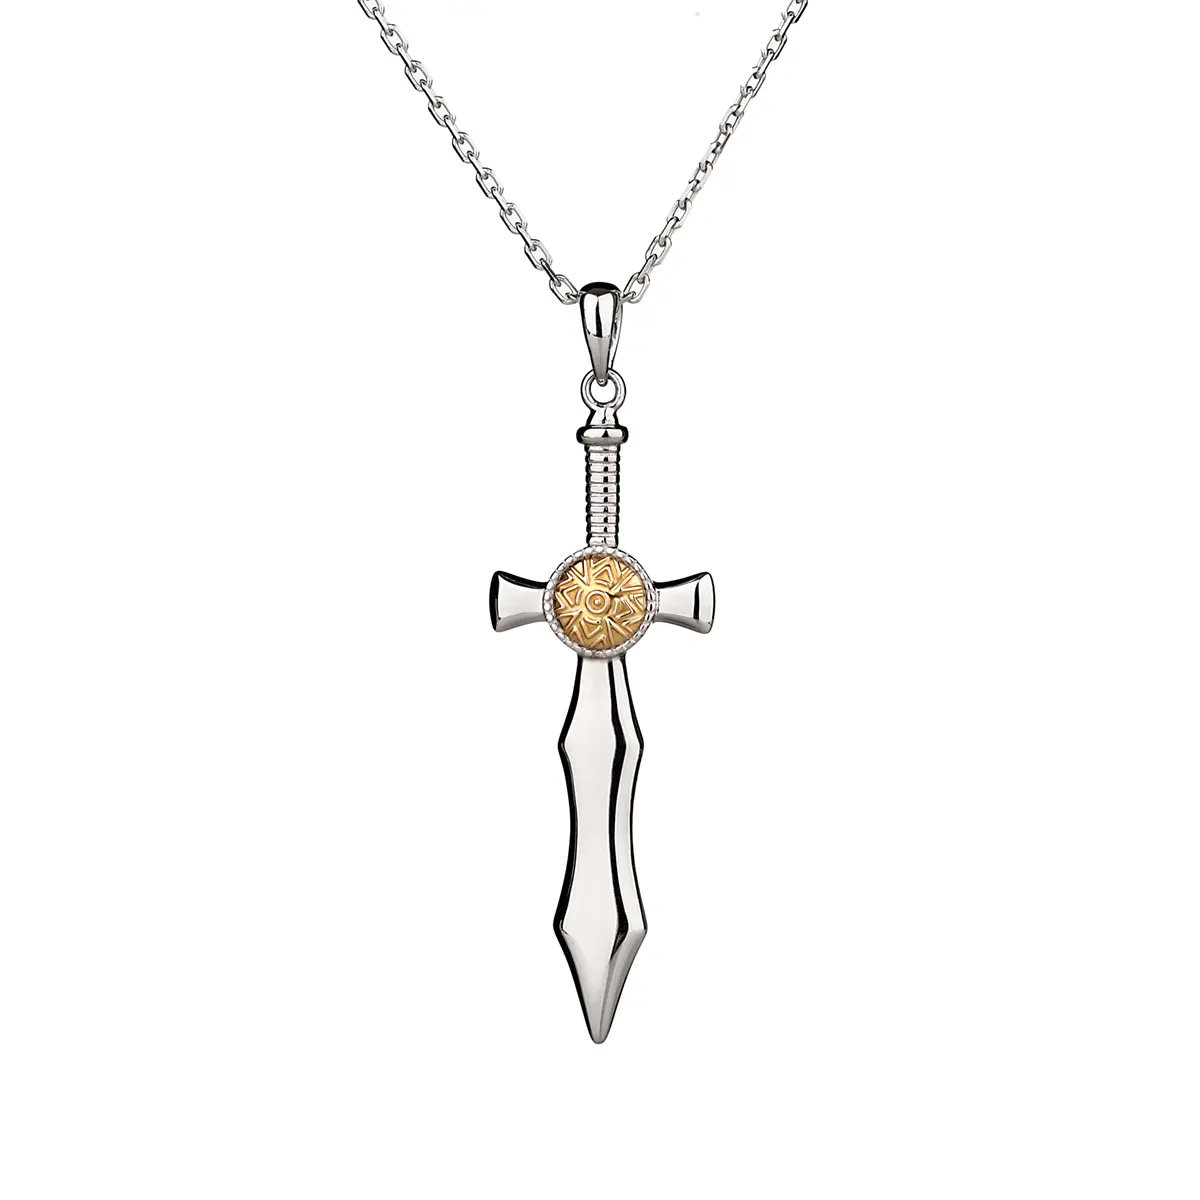 Nuada Sword of Light - keltischer Anhänger aus Sterling Silber und Gold